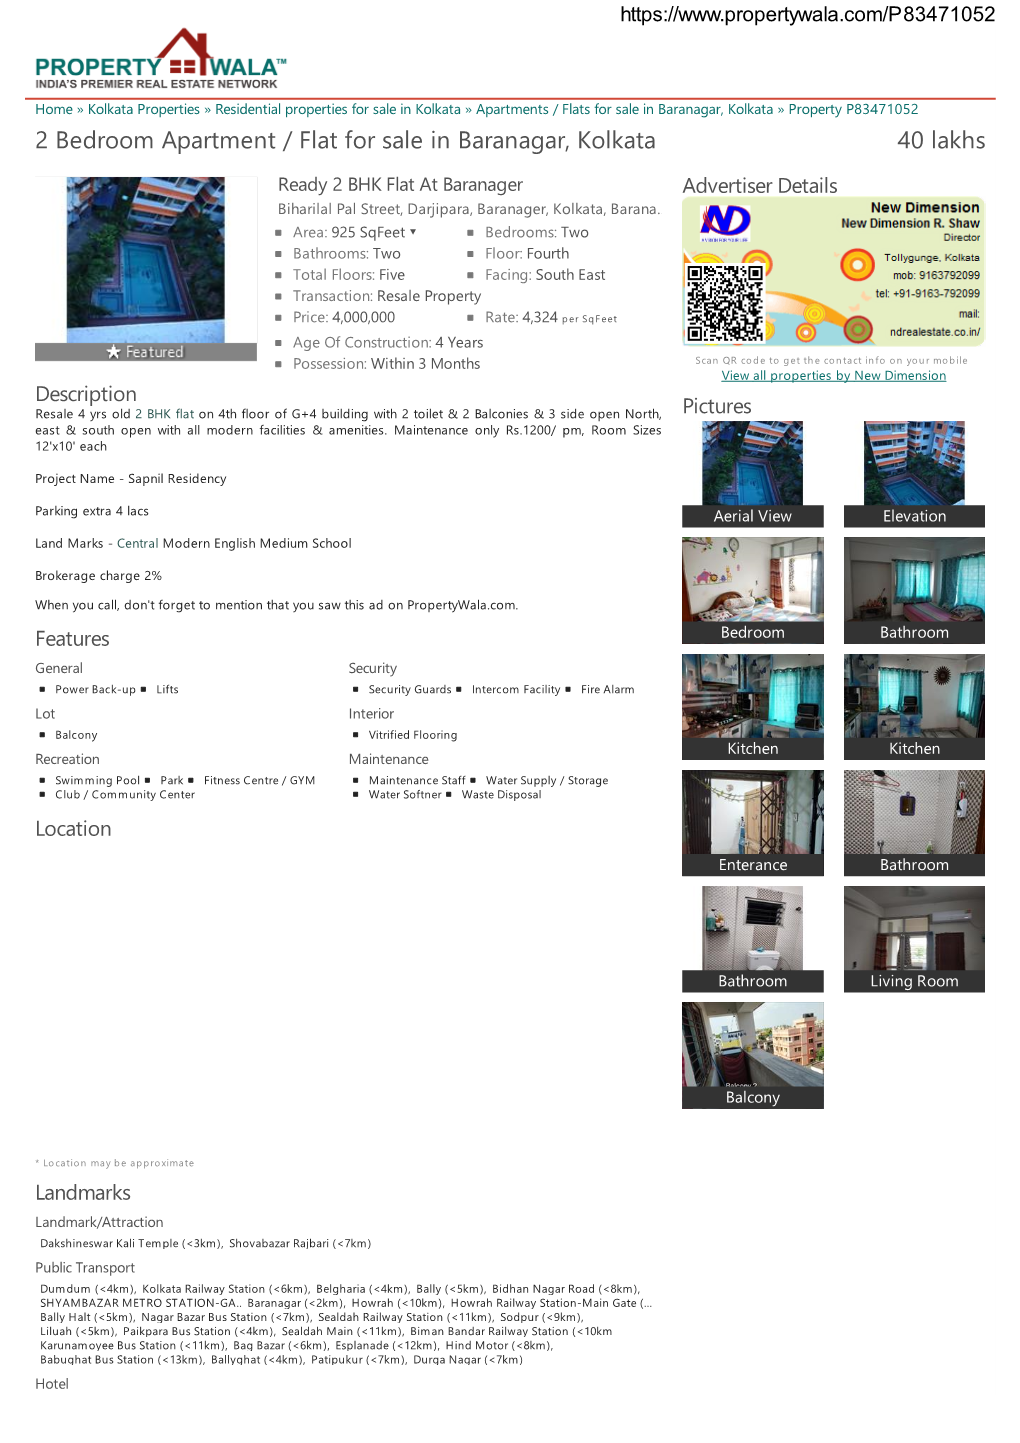 2 Bedroom Apartment / Flat for Sale in Baranagar, Kolkata